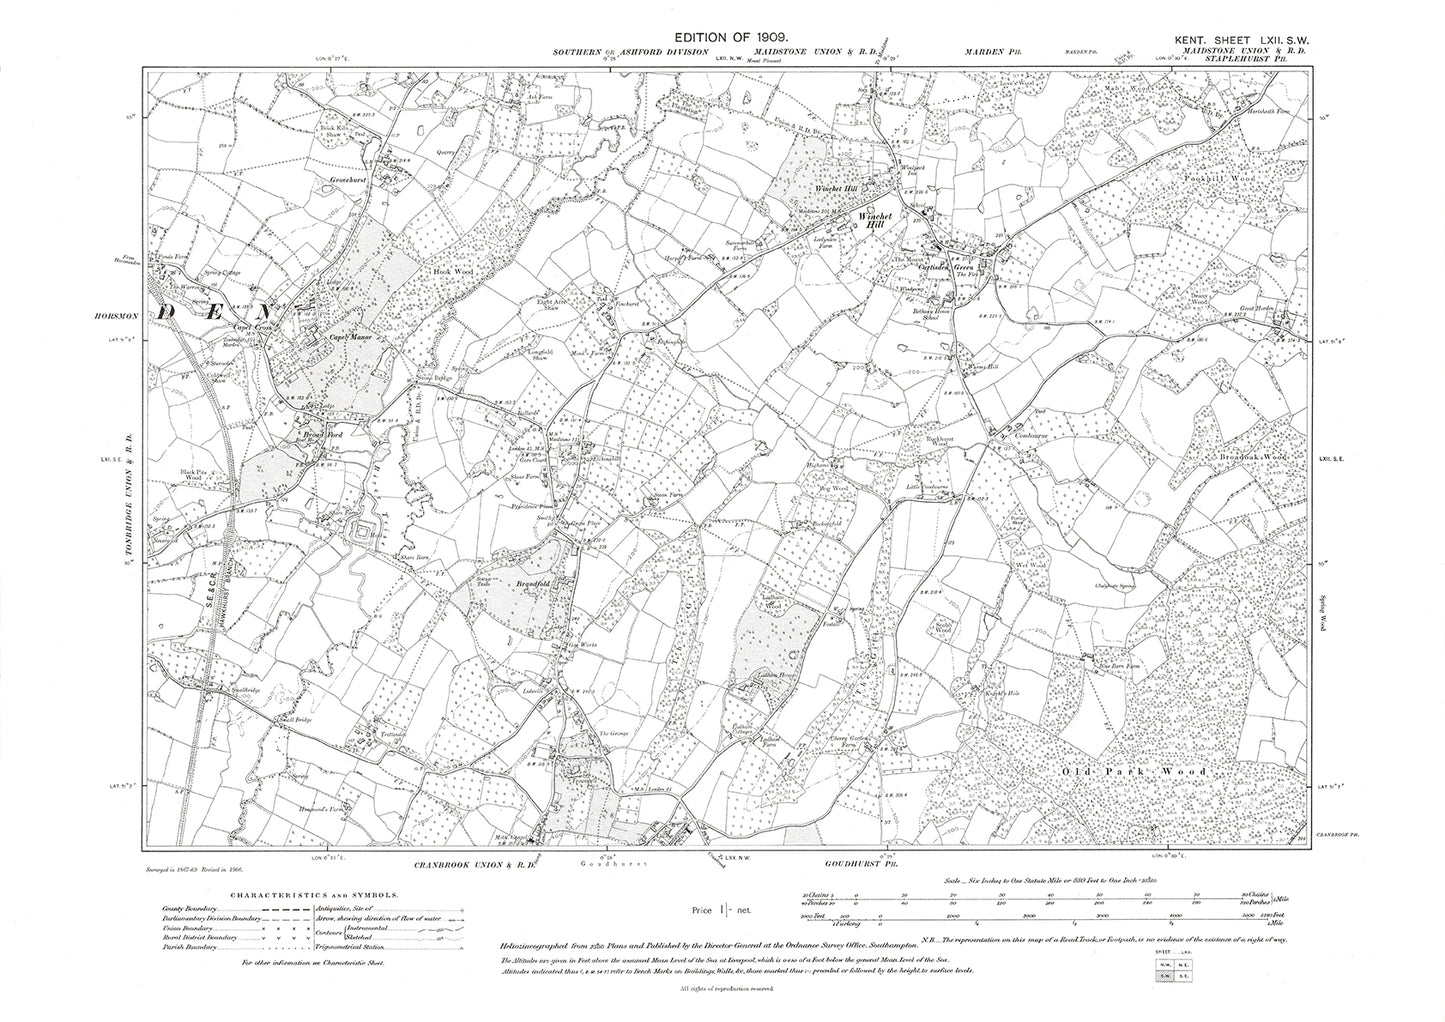 Horsemonden, Cranbrook (north), old map Kent 1909: 62SW